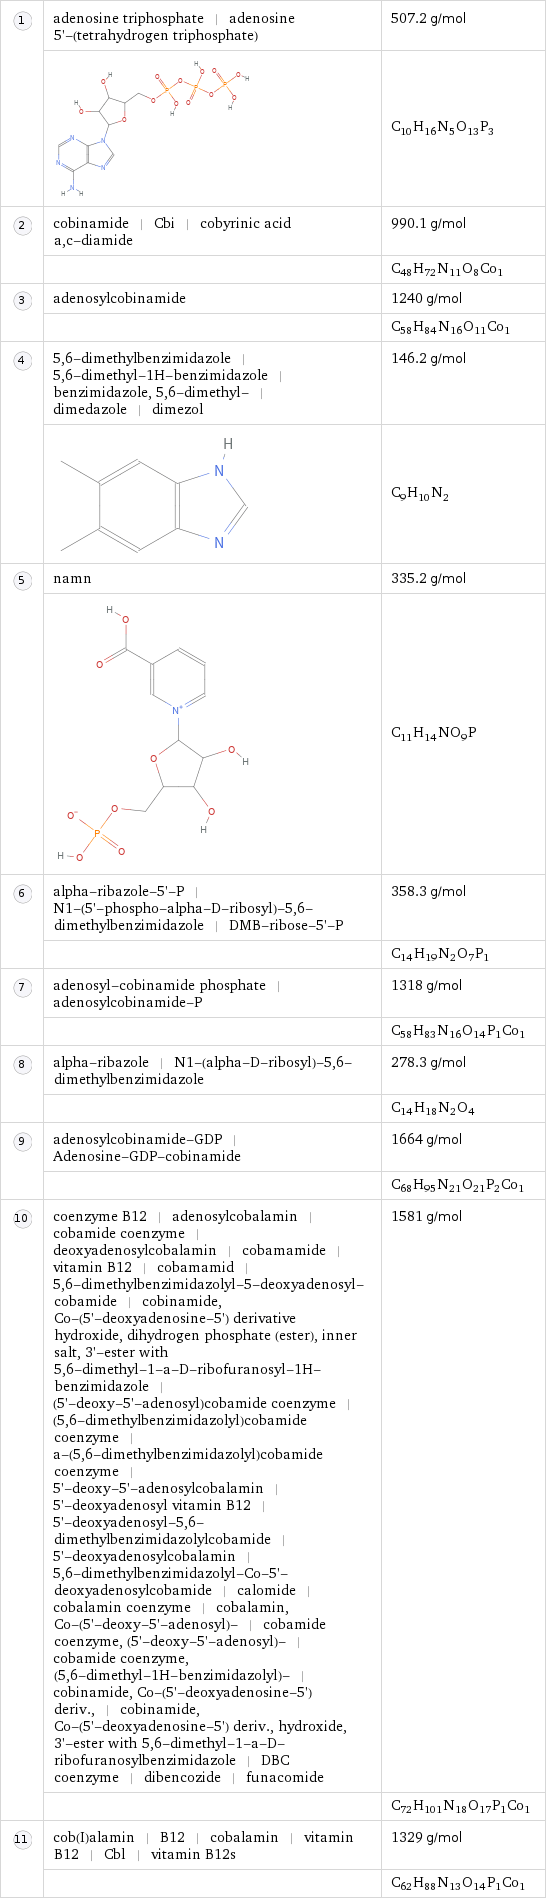  | adenosine triphosphate | adenosine 5'-(tetrahydrogen triphosphate) | 507.2 g/mol  | | C_10H_16N_5O_13P_3  | cobinamide | Cbi | cobyrinic acid a, c-diamide | 990.1 g/mol  | | C_48H_72N_11O_8Co_1  | adenosylcobinamide | 1240 g/mol  | | C_58H_84N_16O_11Co_1  | 5, 6-dimethylbenzimidazole | 5, 6-dimethyl-1H-benzimidazole | benzimidazole, 5, 6-dimethyl- | dimedazole | dimezol | 146.2 g/mol  | | C_9H_10N_2  | namn | 335.2 g/mol  | | C_11H_14NO_9P  | alpha-ribazole-5'-P | N1-(5'-phospho-alpha-D-ribosyl)-5, 6-dimethylbenzimidazole | DMB-ribose-5'-P | 358.3 g/mol  | | C_14H_19N_2O_7P_1  | adenosyl-cobinamide phosphate | adenosylcobinamide-P | 1318 g/mol  | | C_58H_83N_16O_14P_1Co_1  | alpha-ribazole | N1-(alpha-D-ribosyl)-5, 6-dimethylbenzimidazole | 278.3 g/mol  | | C_14H_18N_2O_4  | adenosylcobinamide-GDP | Adenosine-GDP-cobinamide | 1664 g/mol  | | C_68H_95N_21O_21P_2Co_1  | coenzyme B12 | adenosylcobalamin | cobamide coenzyme | deoxyadenosylcobalamin | cobamamide | vitamin B12 | cobamamid | 5, 6-dimethylbenzimidazolyl-5-deoxyadenosyl-cobamide | cobinamide, Co-(5'-deoxyadenosine-5') derivative hydroxide, dihydrogen phosphate (ester), inner salt, 3'-ester with 5, 6-dimethyl-1-a-D-ribofuranosyl-1H-benzimidazole | (5'-deoxy-5'-adenosyl)cobamide coenzyme | (5, 6-dimethylbenzimidazolyl)cobamide coenzyme | a-(5, 6-dimethylbenzimidazolyl)cobamide coenzyme | 5'-deoxy-5'-adenosylcobalamin | 5'-deoxyadenosyl vitamin B12 | 5'-deoxyadenosyl-5, 6-dimethylbenzimidazolylcobamide | 5'-deoxyadenosylcobalamin | 5, 6-dimethylbenzimidazolyl-Co-5'-deoxyadenosylcobamide | calomide | cobalamin coenzyme | cobalamin, Co-(5'-deoxy-5'-adenosyl)- | cobamide coenzyme, (5'-deoxy-5'-adenosyl)- | cobamide coenzyme, (5, 6-dimethyl-1H-benzimidazolyl)- | cobinamide, Co-(5'-deoxyadenosine-5') deriv., | cobinamide, Co-(5'-deoxyadenosine-5') deriv., hydroxide, 3'-ester with 5, 6-dimethyl-1-a-D-ribofuranosylbenzimidazole | DBC coenzyme | dibencozide | funacomide | 1581 g/mol  | | C_72H_101N_18O_17P_1Co_1  | cob(I)alamin | B12 | cobalamin | vitamin B12 | Cbl | vitamin B12s | 1329 g/mol  | | C_62H_88N_13O_14P_1Co_1